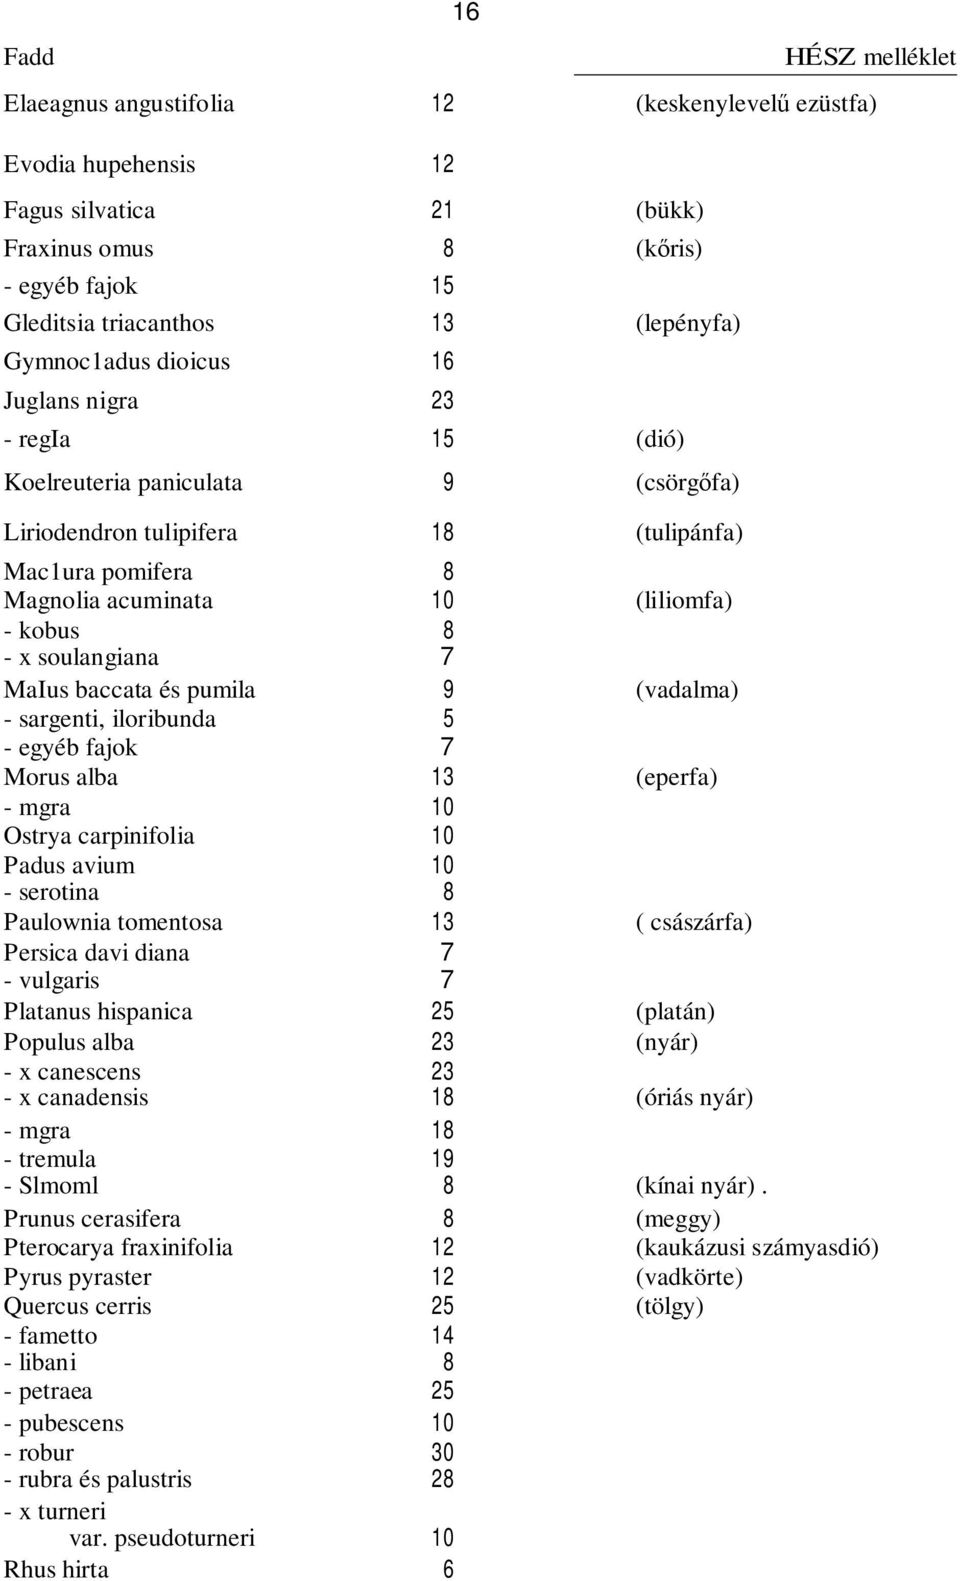 soulangiana 7 MaIus baccata és pumila 9 (vadalma) - sargenti, iloribunda 5 - egyéb fajok 7 Morus alba 13 (eperfa) - mgra 10 Ostrya carpinifolia 10 Padus avium 10 - serotina 8 Paulownia tomentosa 13 (